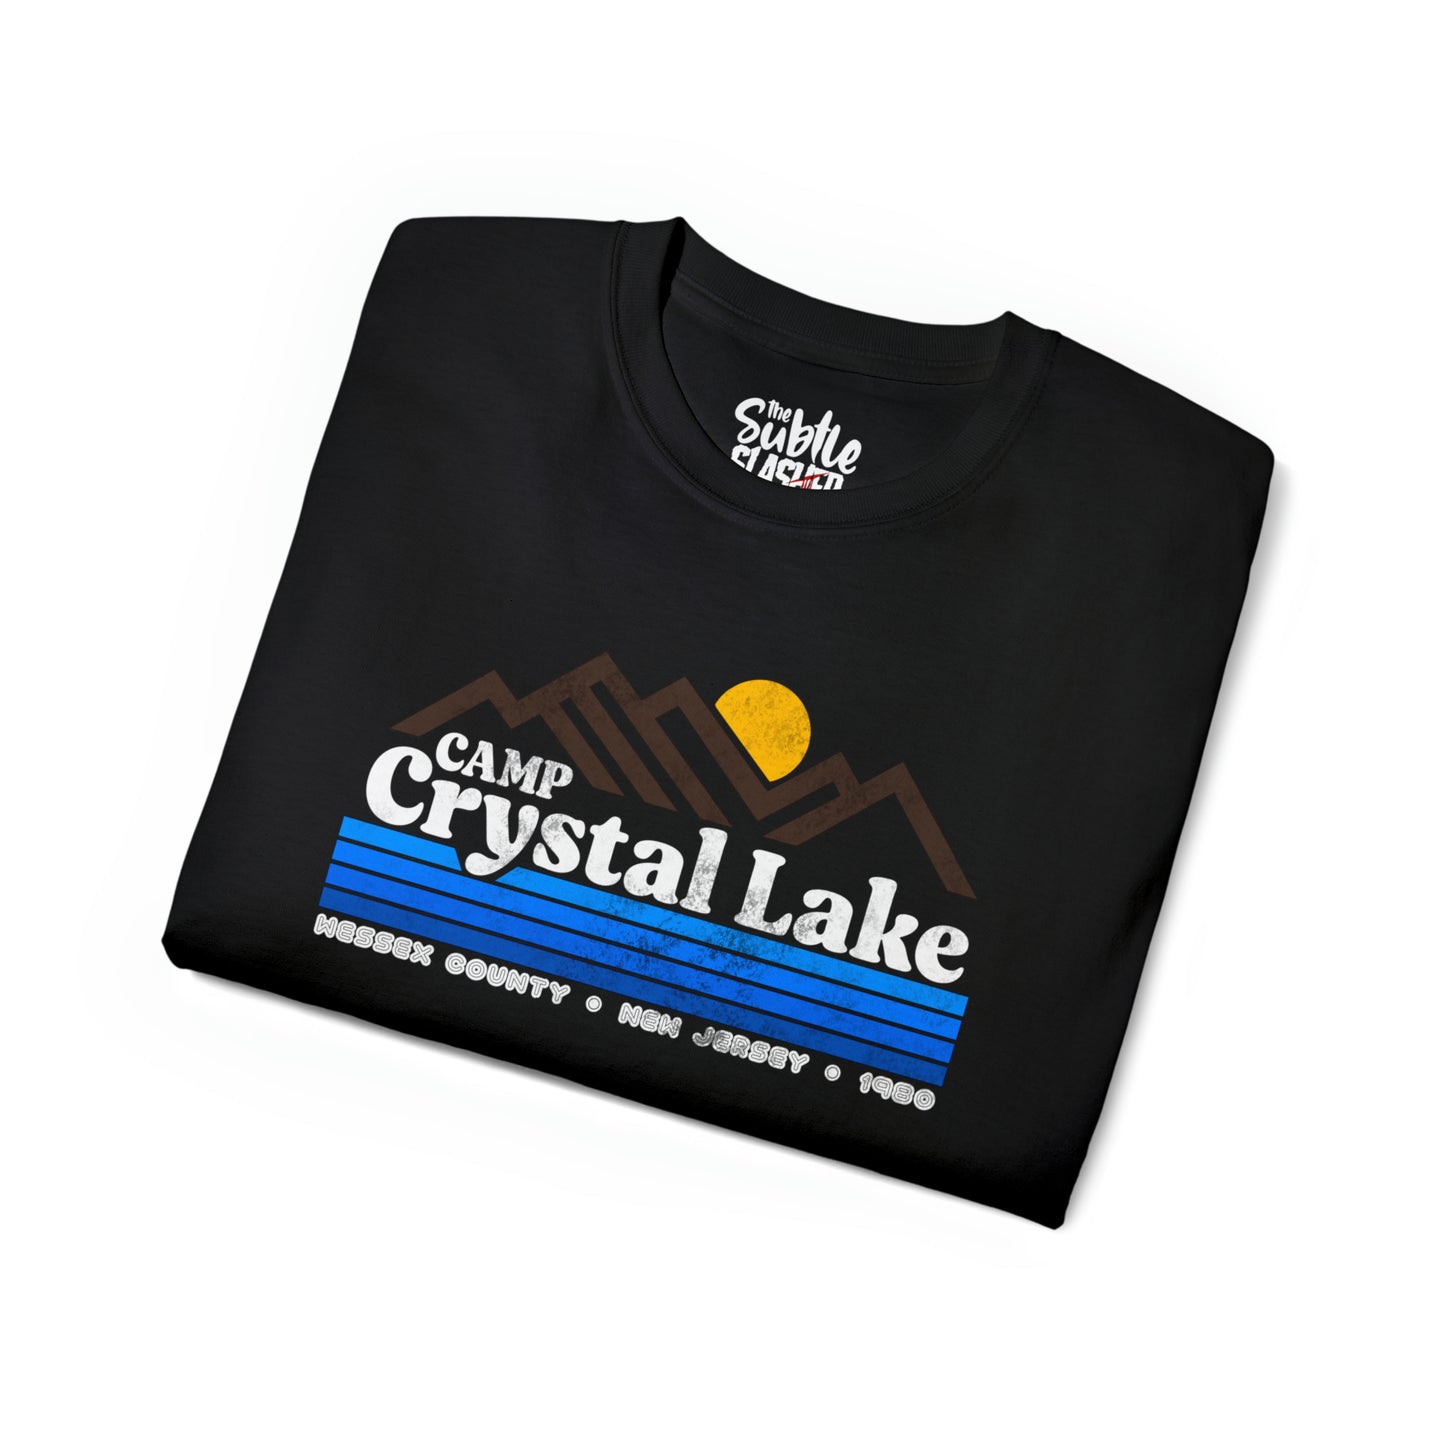 Camp Crystal Lake Tee